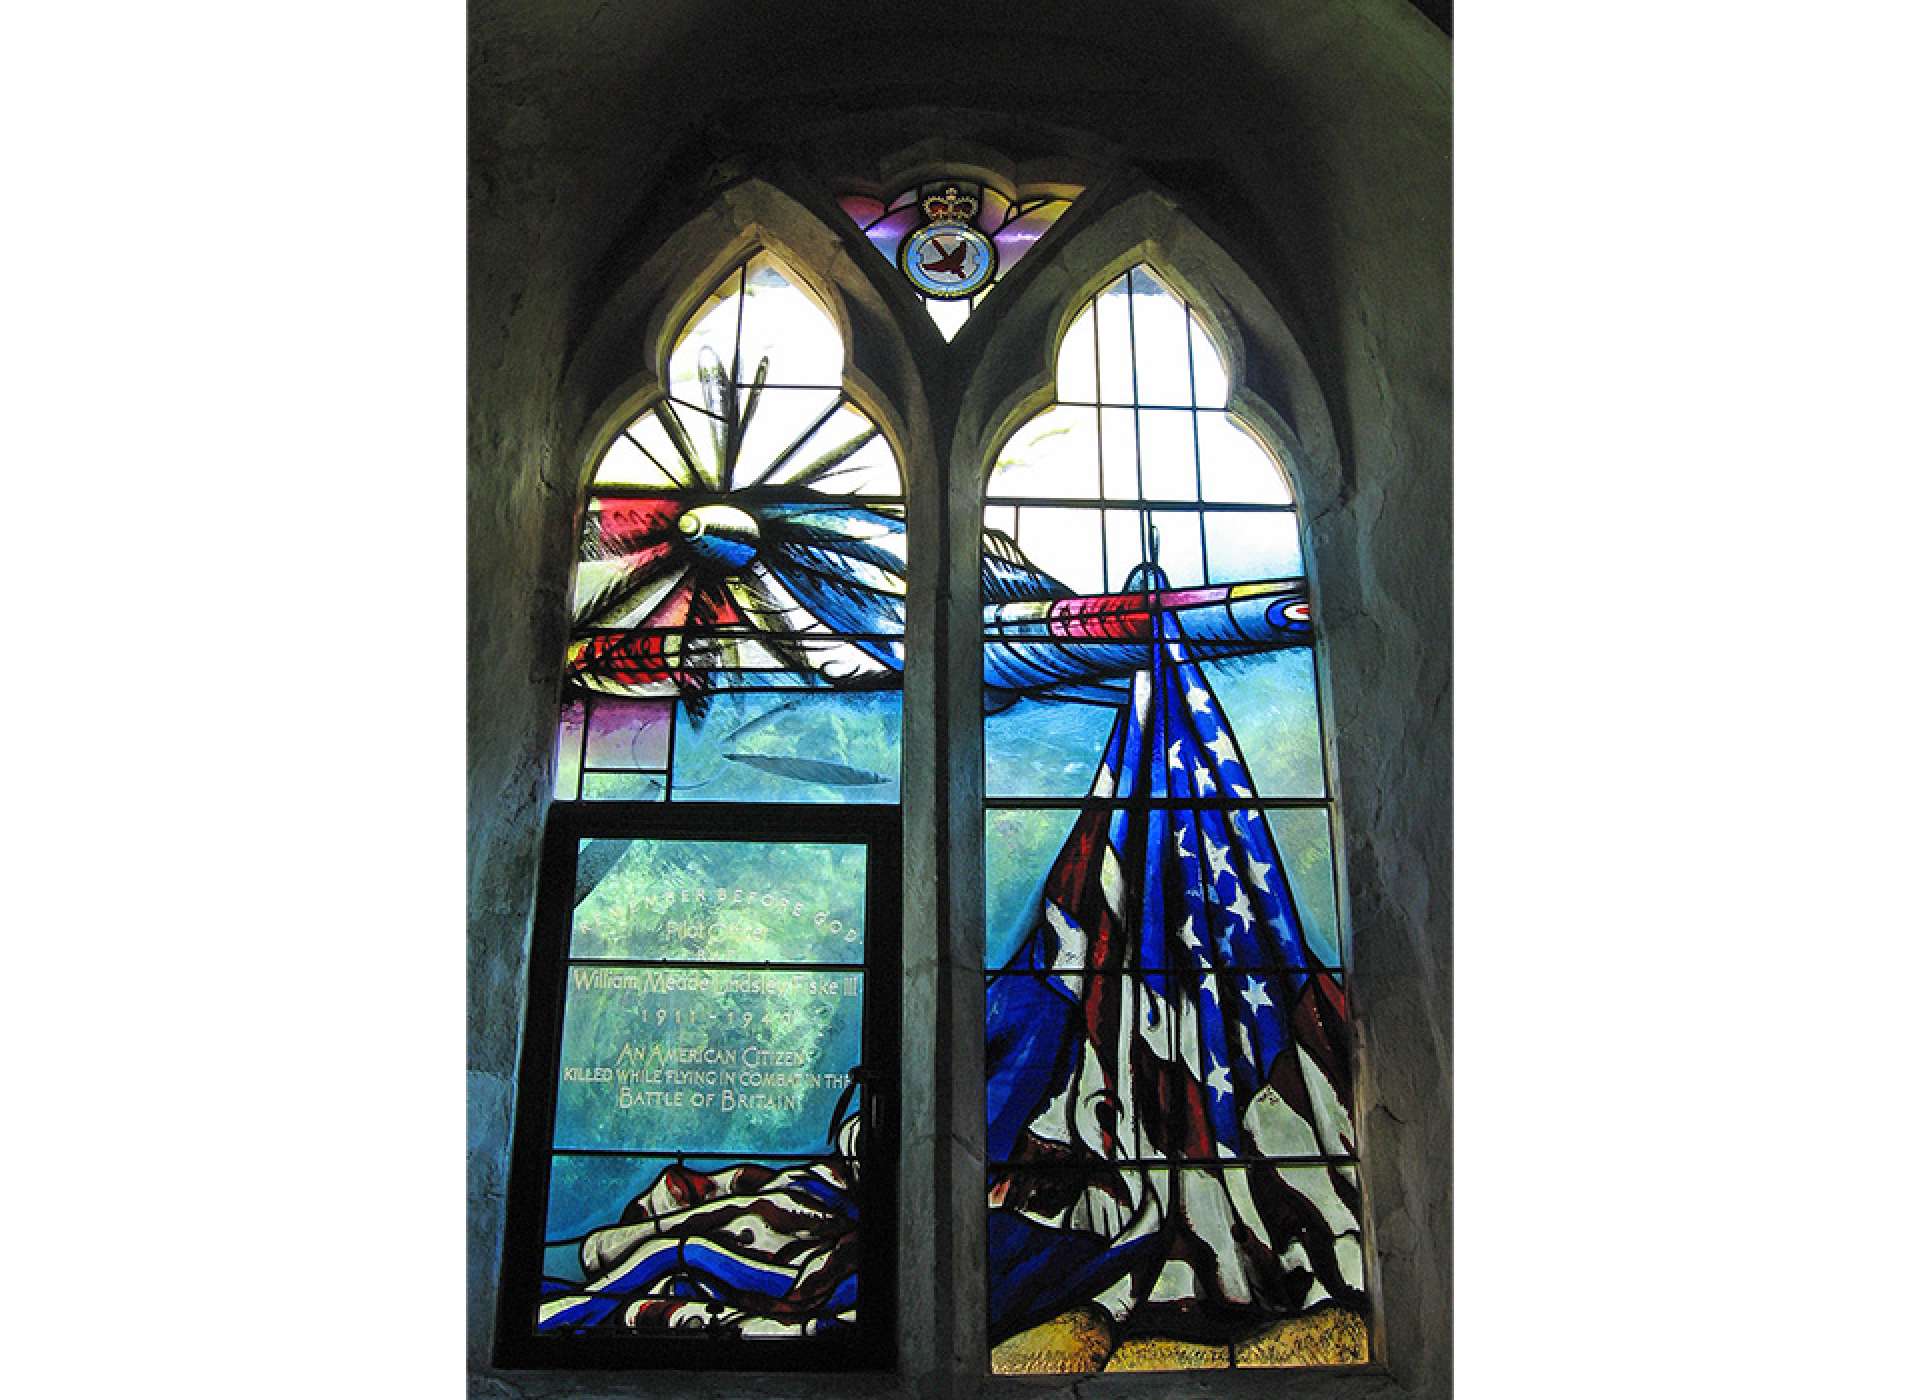 William Meade Lindsley “Billy” Fiske III stained glass window